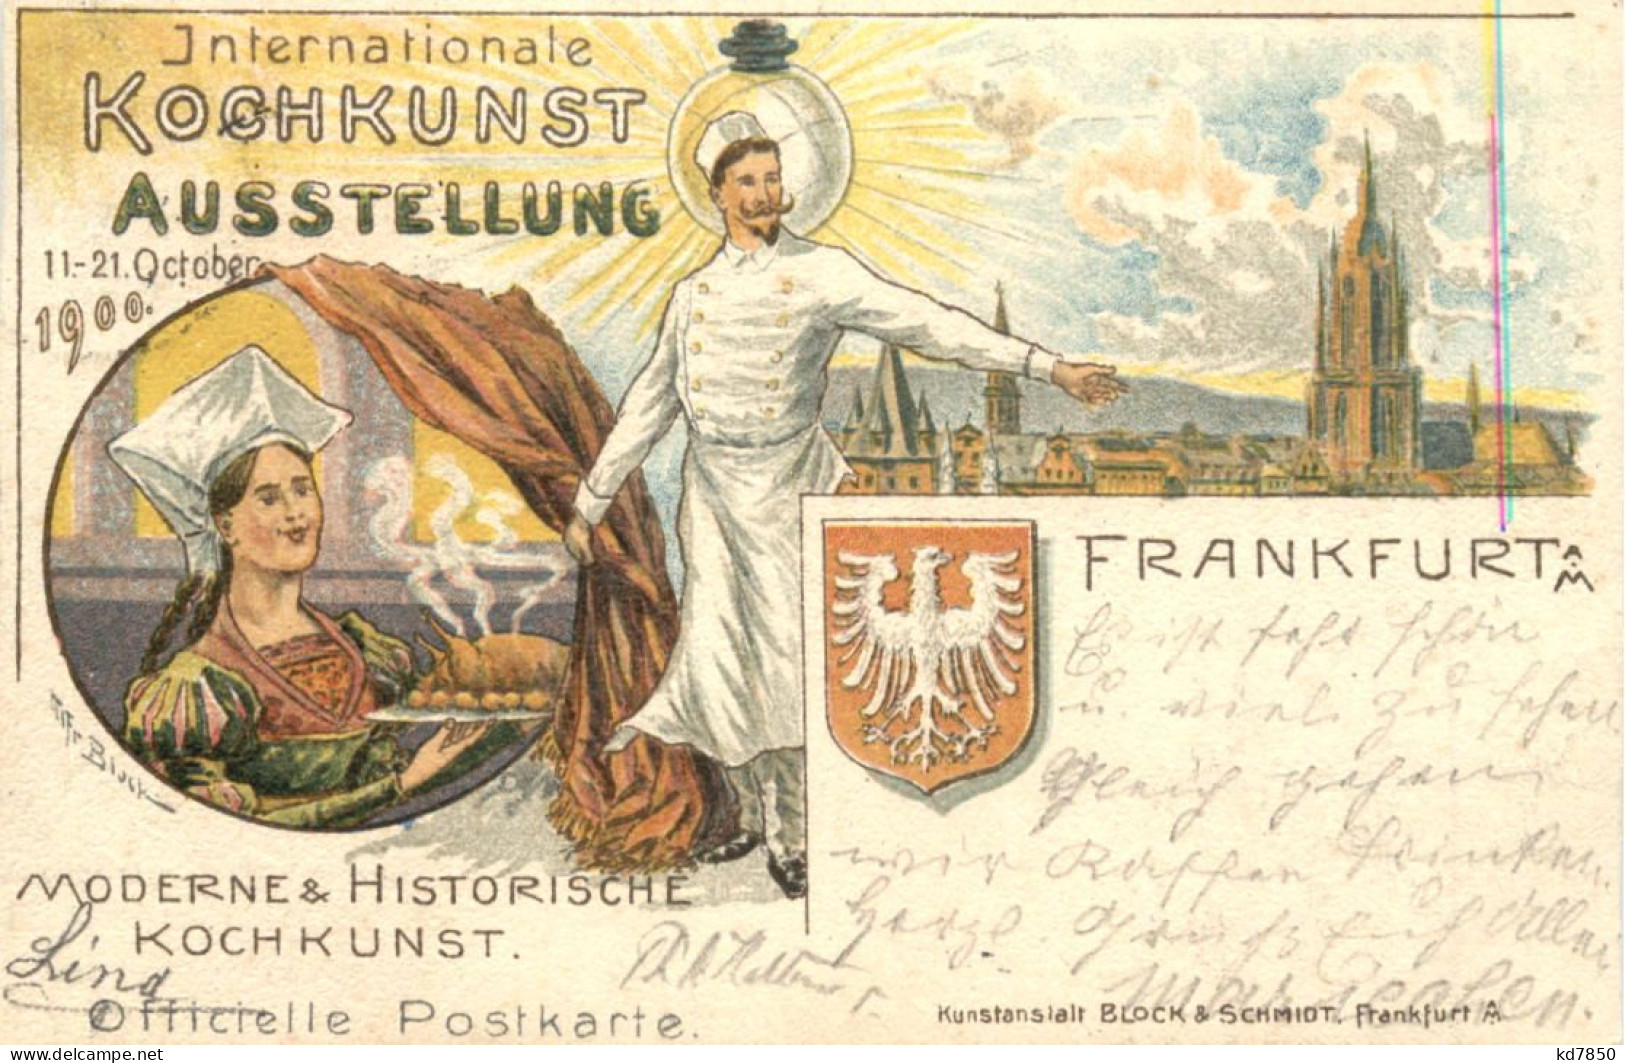 Frankfurt Main - Kochkunst Ausstellung 1900 - Litho - Frankfurt A. Main